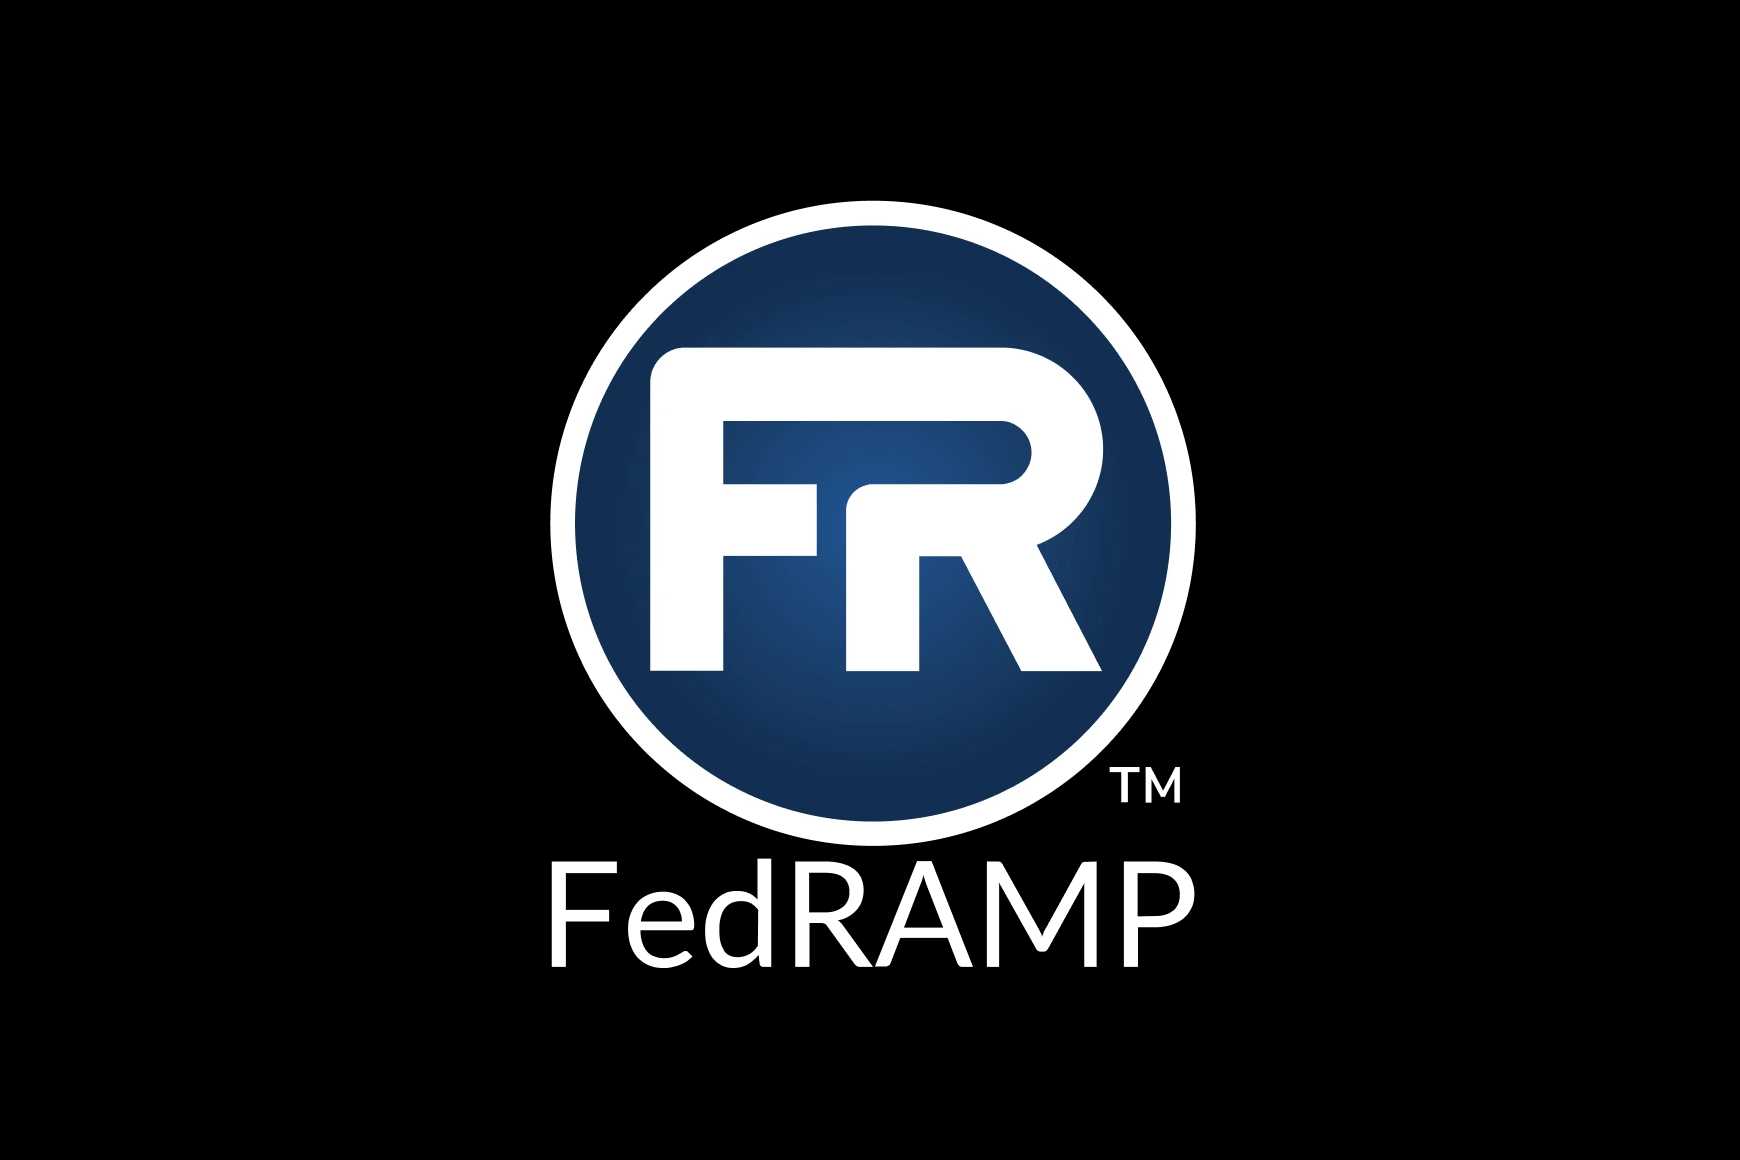 Government Federal Fedramp Standard White Logo